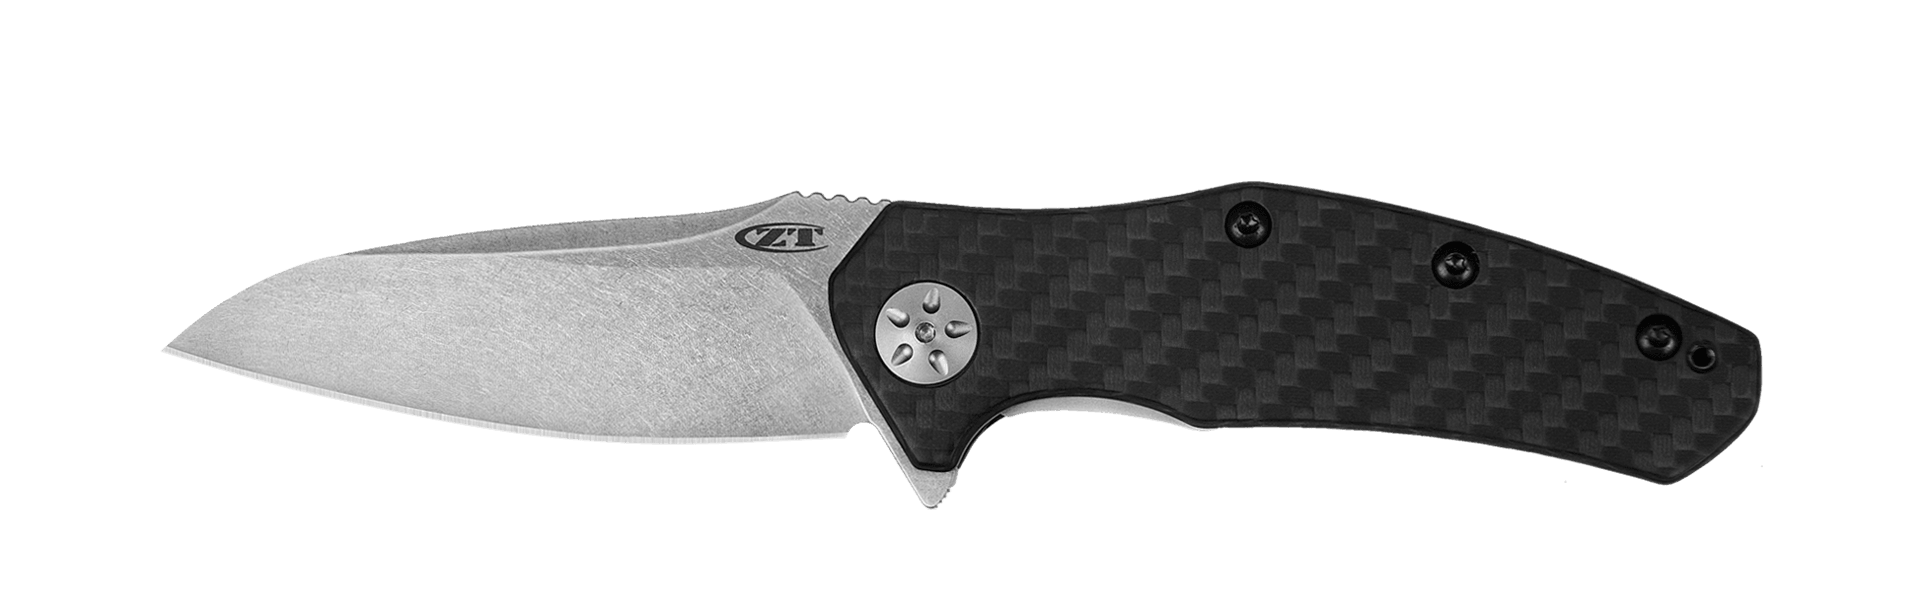 Zero Tolerance Linerlock A/O Carbon Fiber SW S35VN - Knives.mx